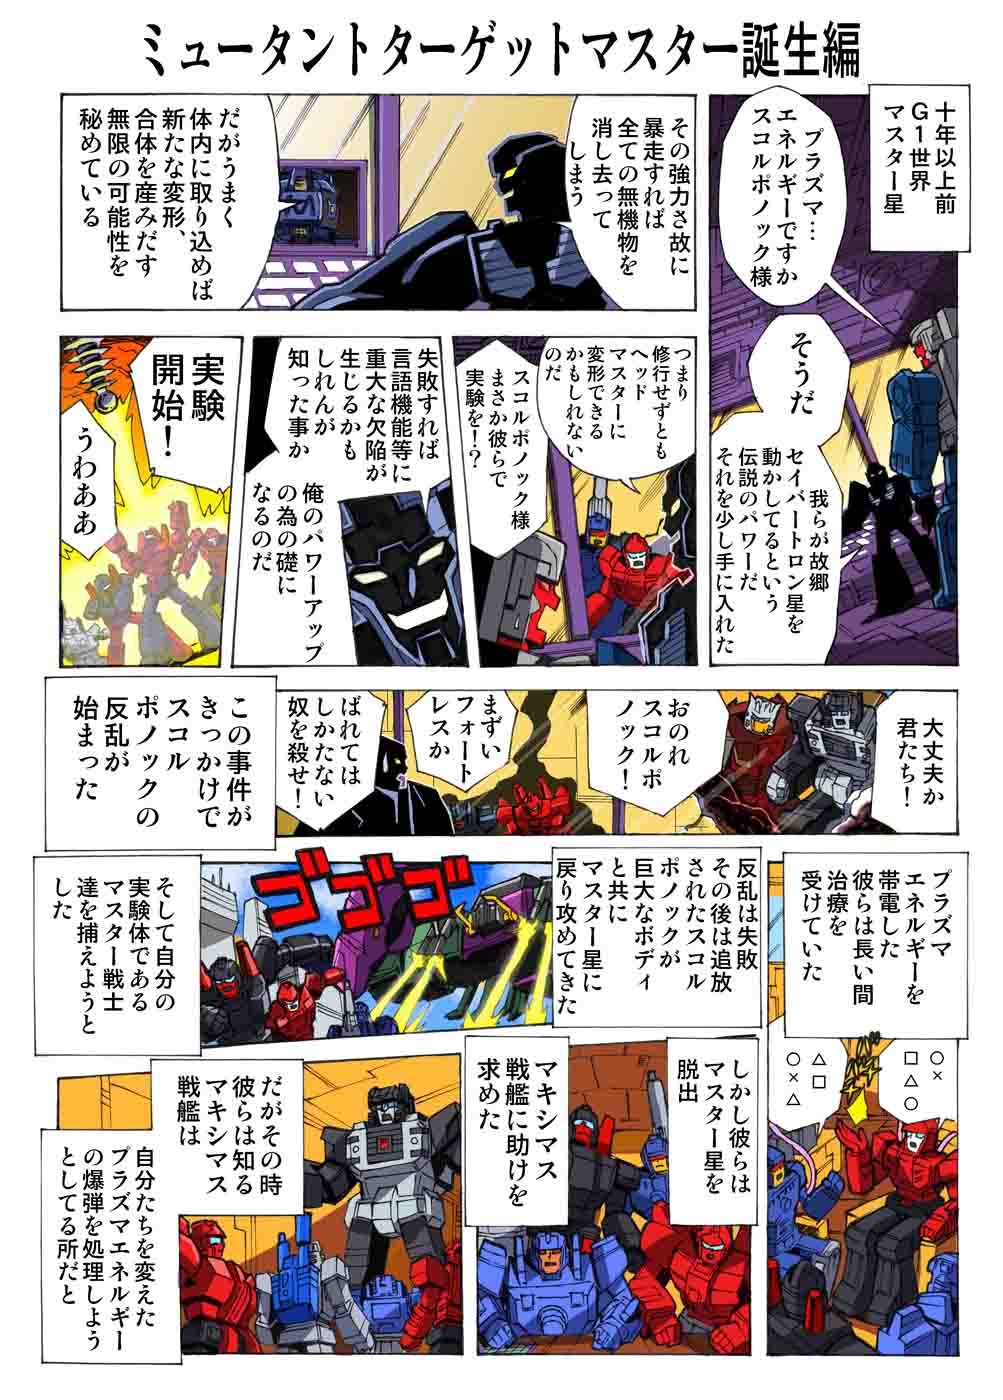 Transformers News: New Takara Tomy Transformers Legends LG46 Manga Online